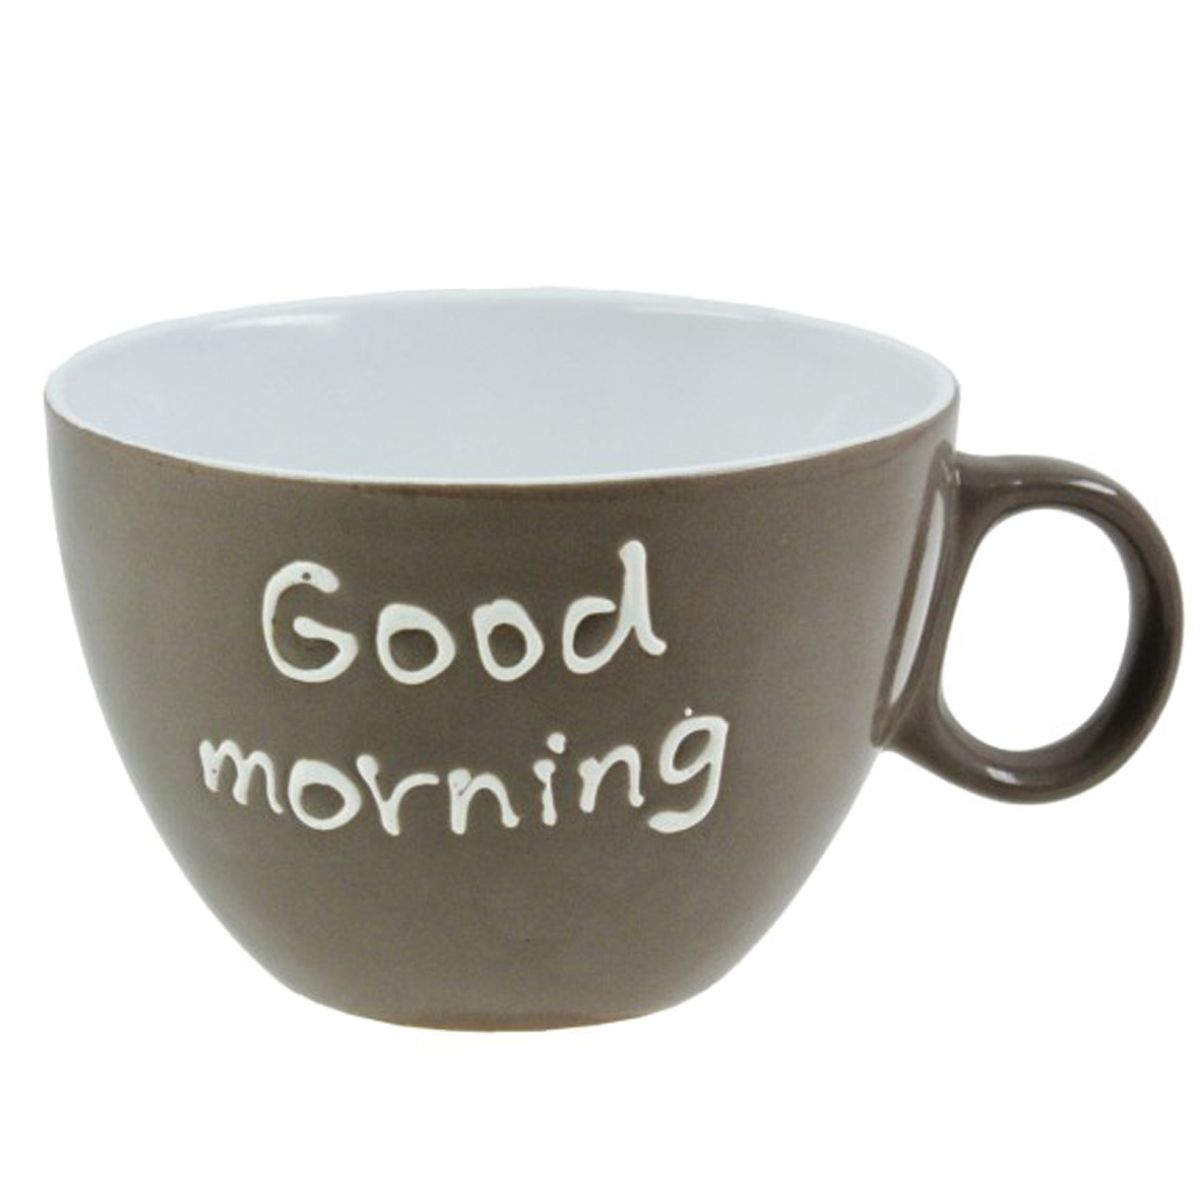 Good Morning Ceramic breakfast bowl - Brown